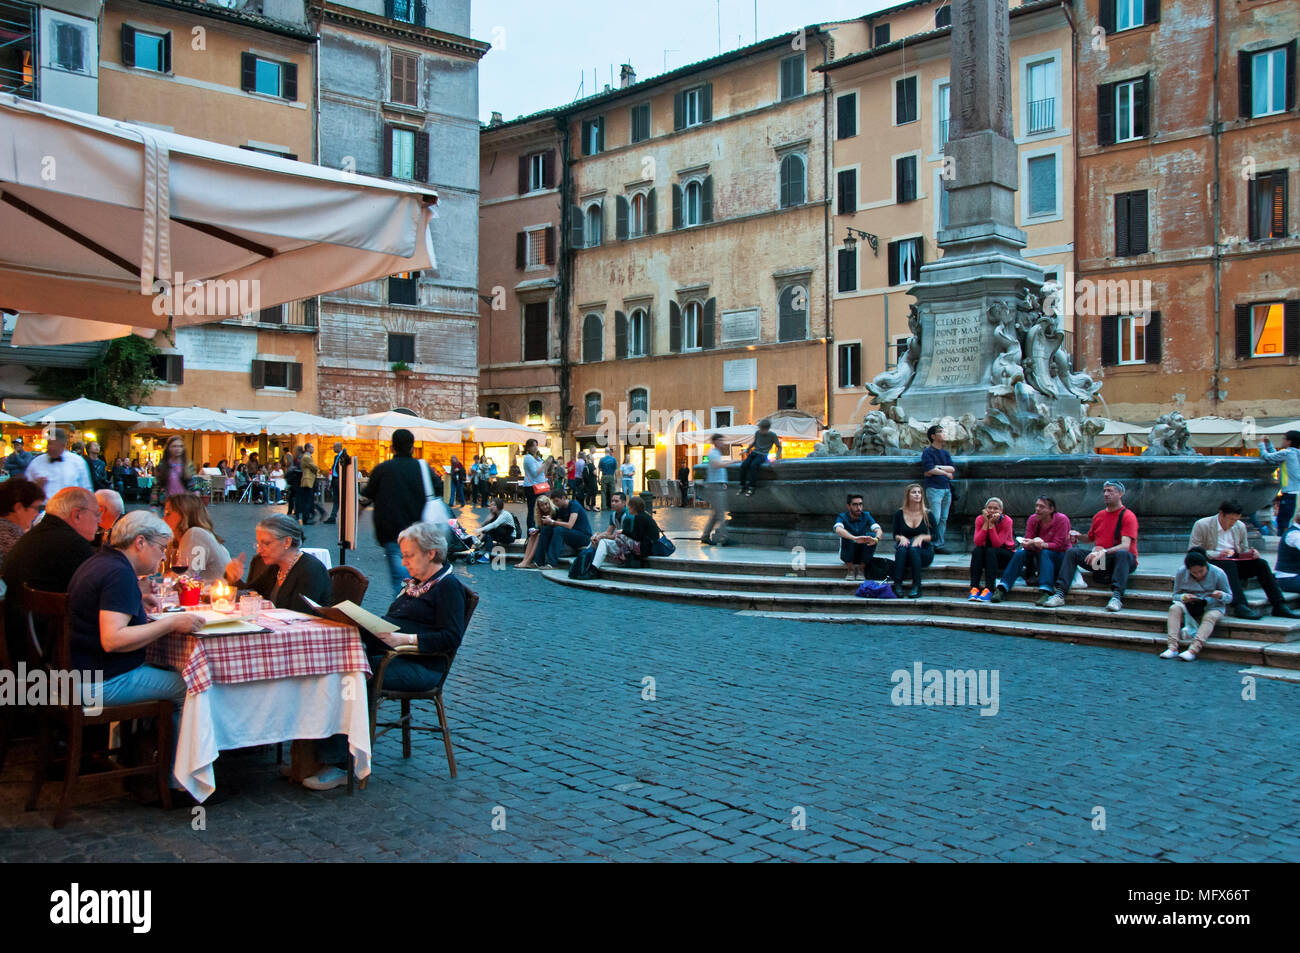 Piazza della Rotonda with tourists to admire the Pantheon. Rome, Italy Stock Photo